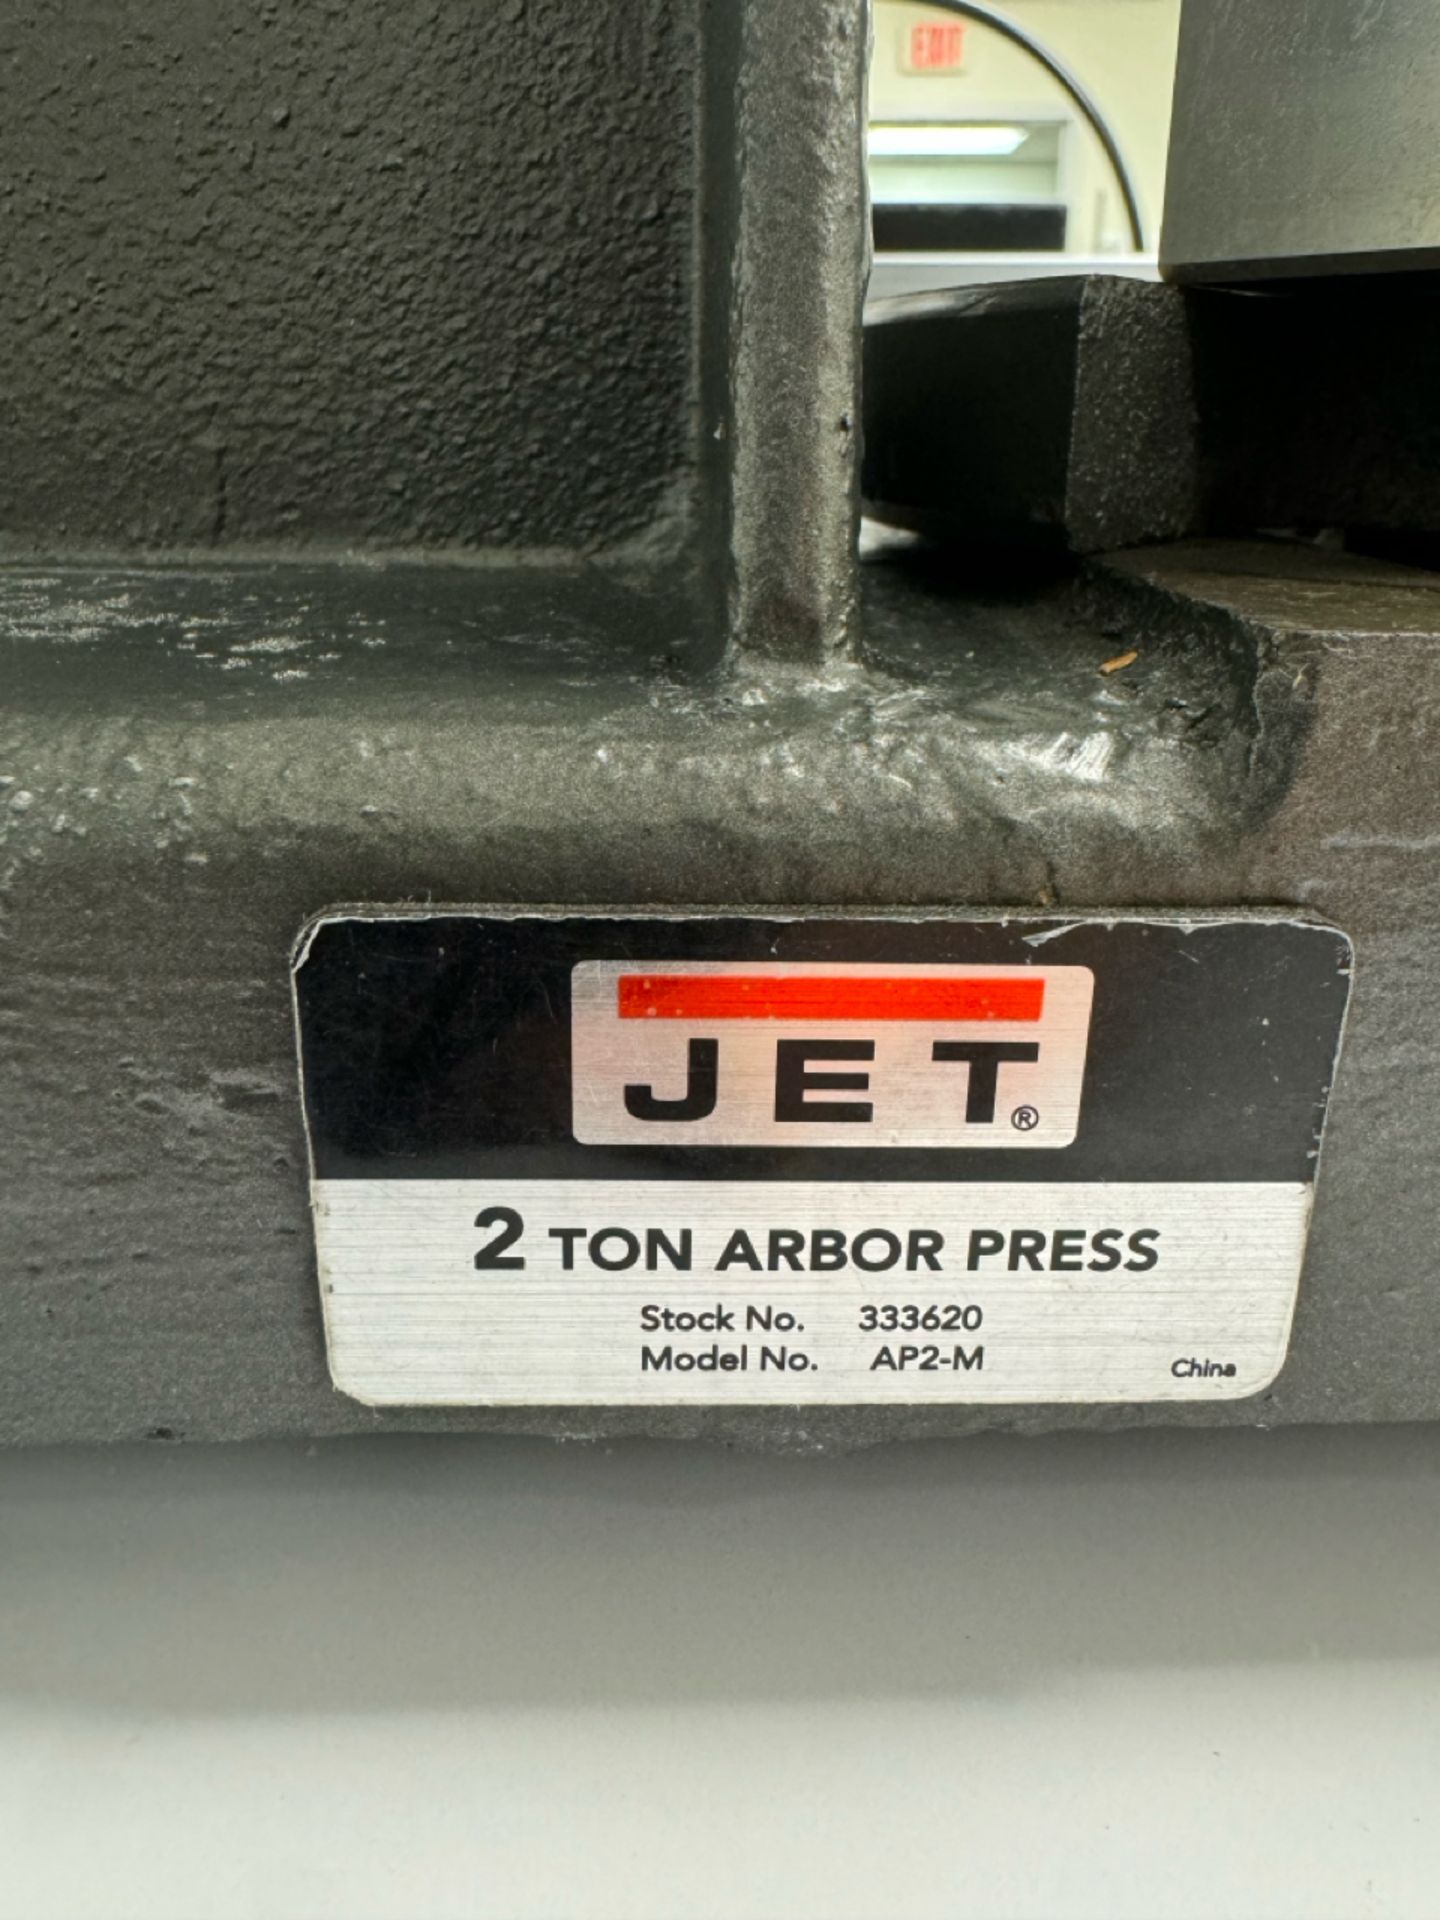 Jet Arbor Press - Image 2 of 3